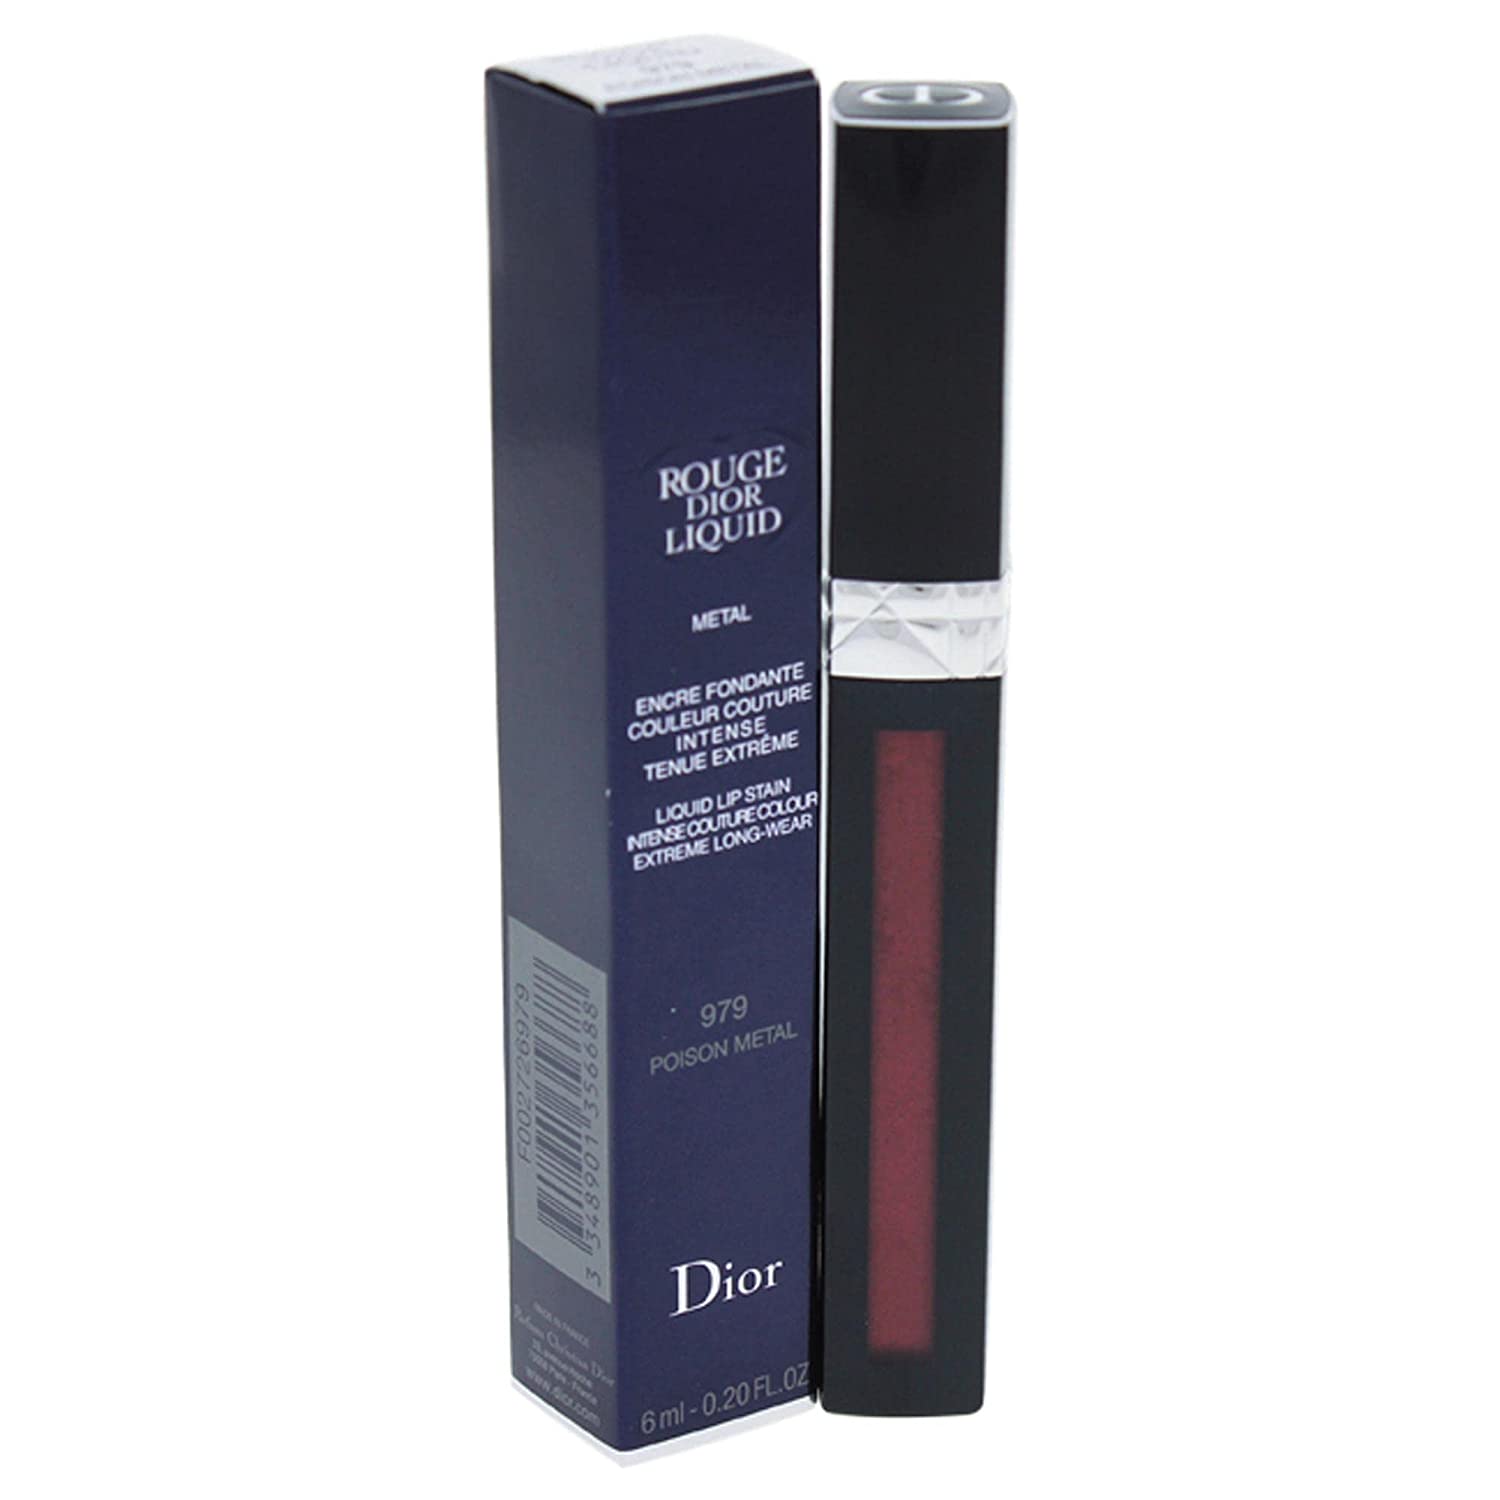 Dior Lip Lipstick Rouge Dior Liquid Nr. 979 Poison Metal 6 ml, ‎979